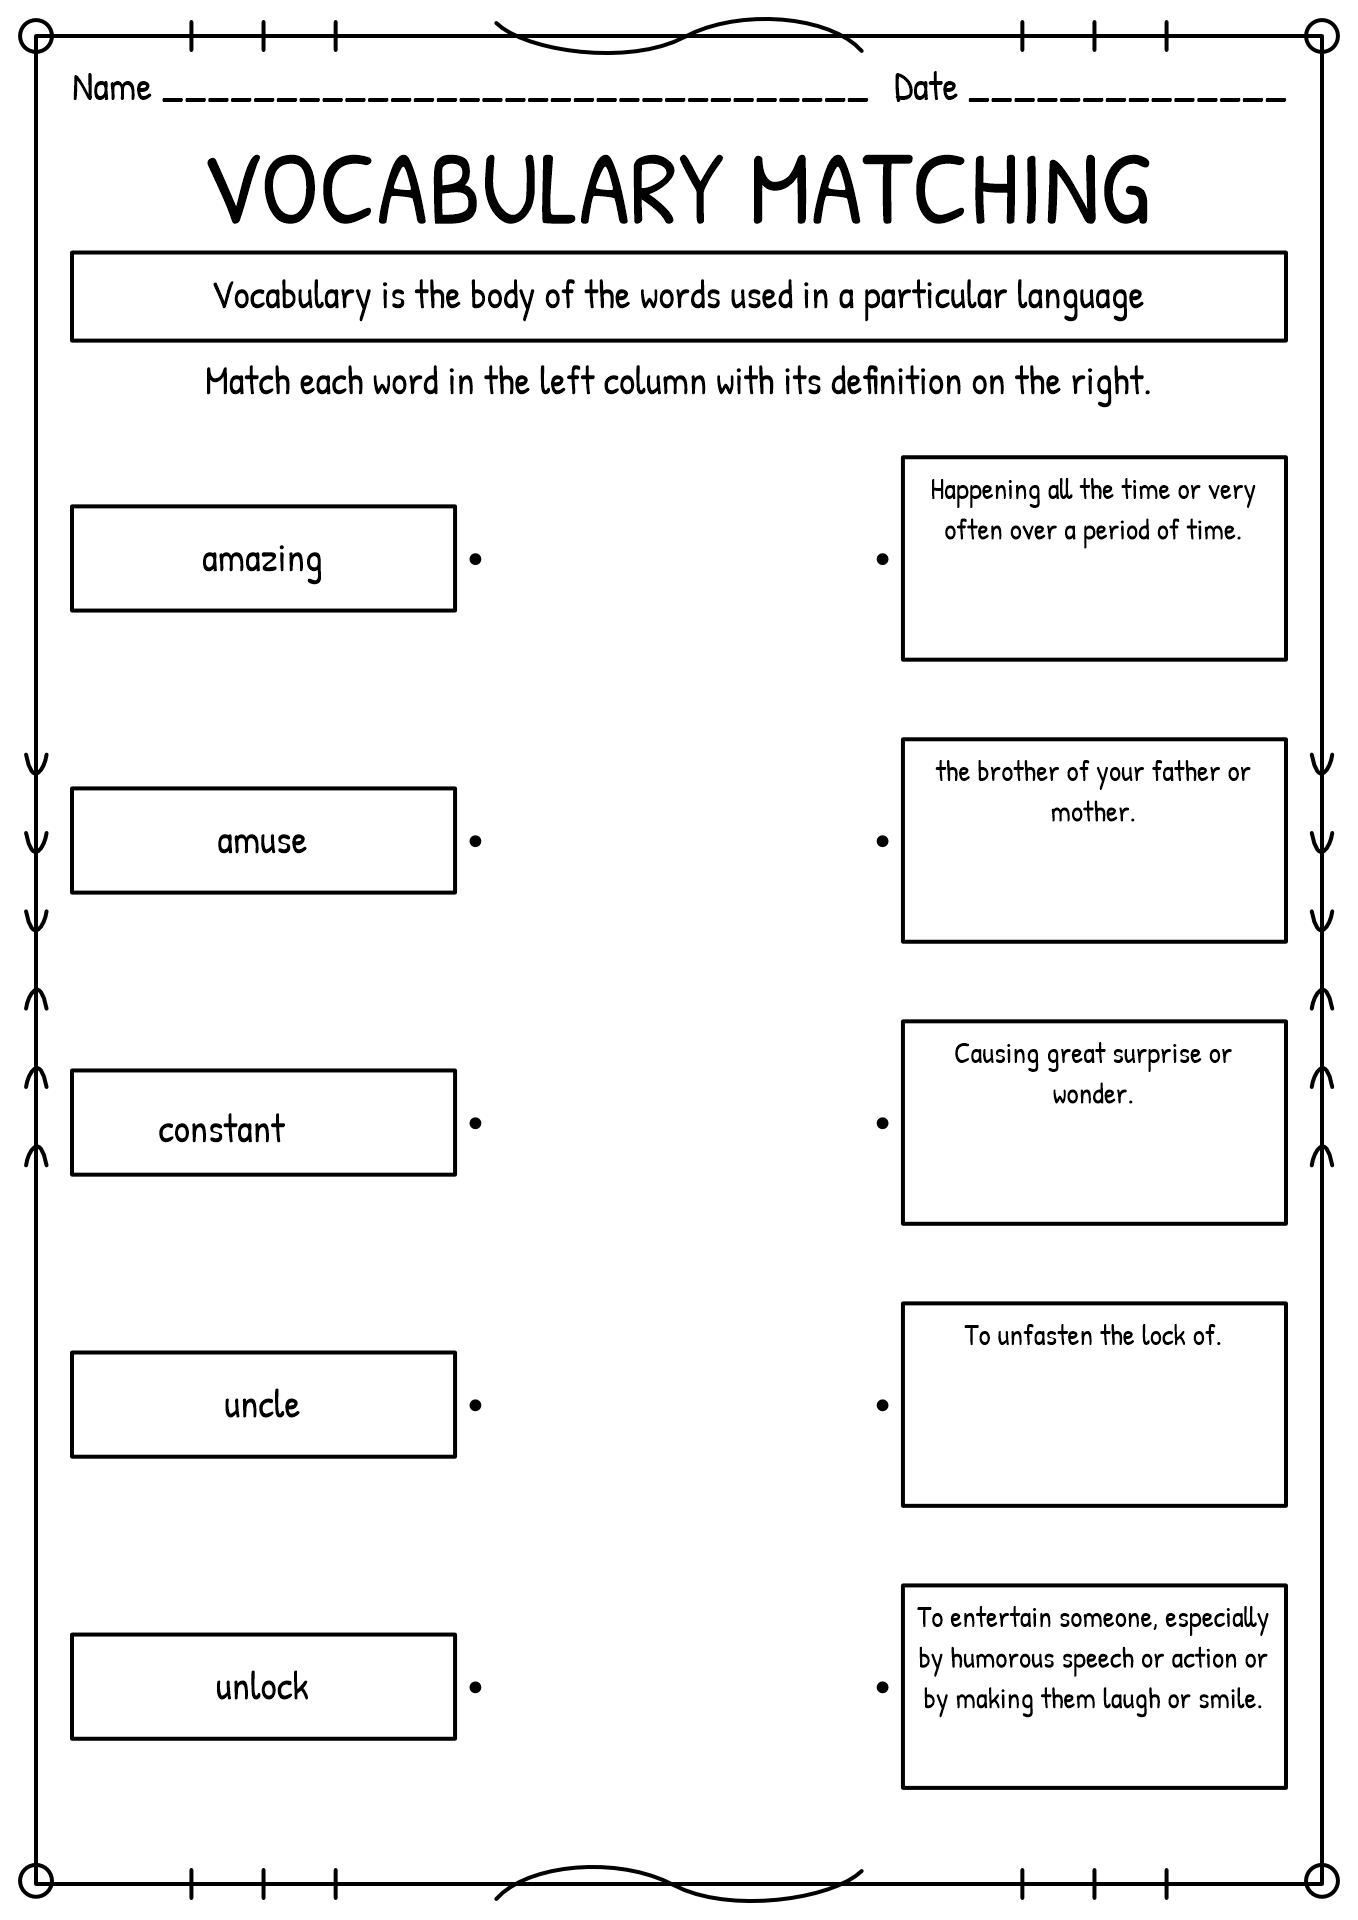 Vocabulary Matching Worksheet Template